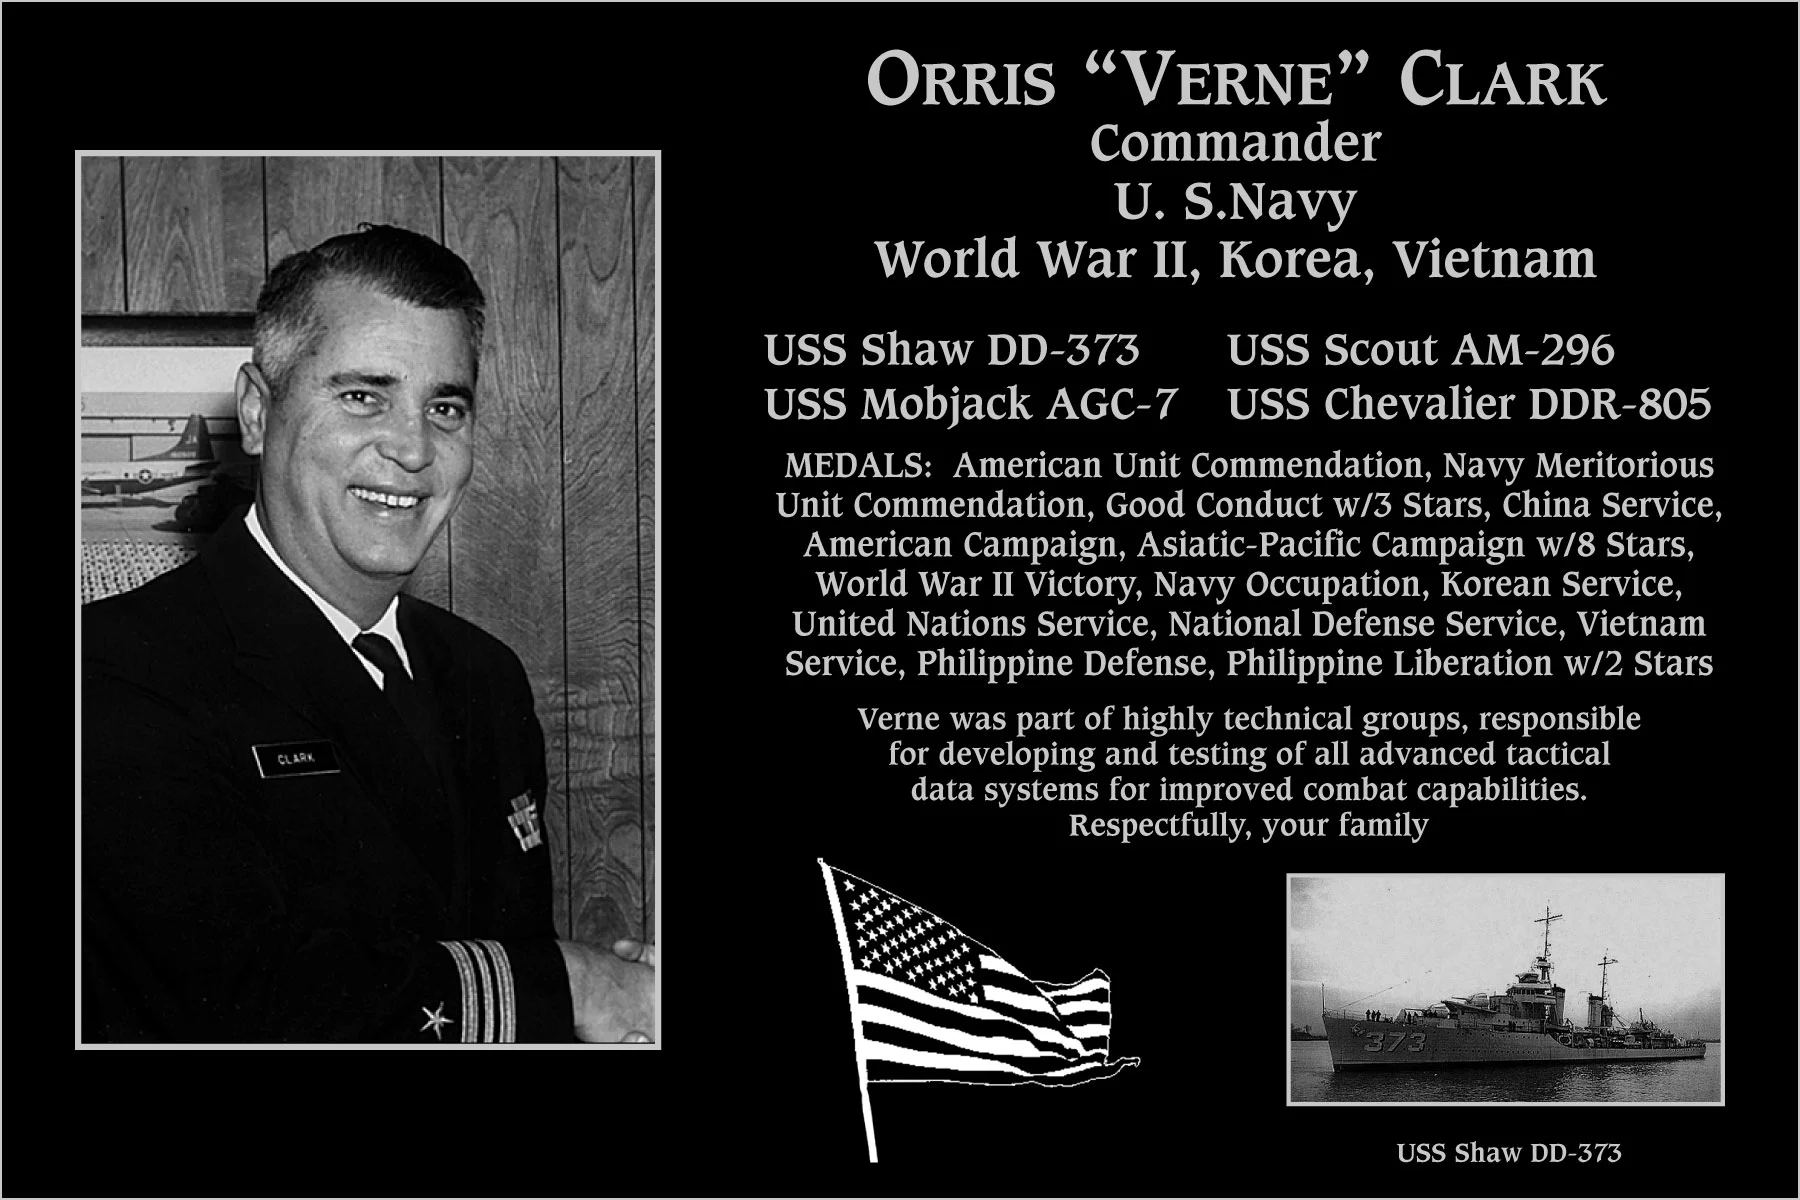 Orris “Verne” Clark